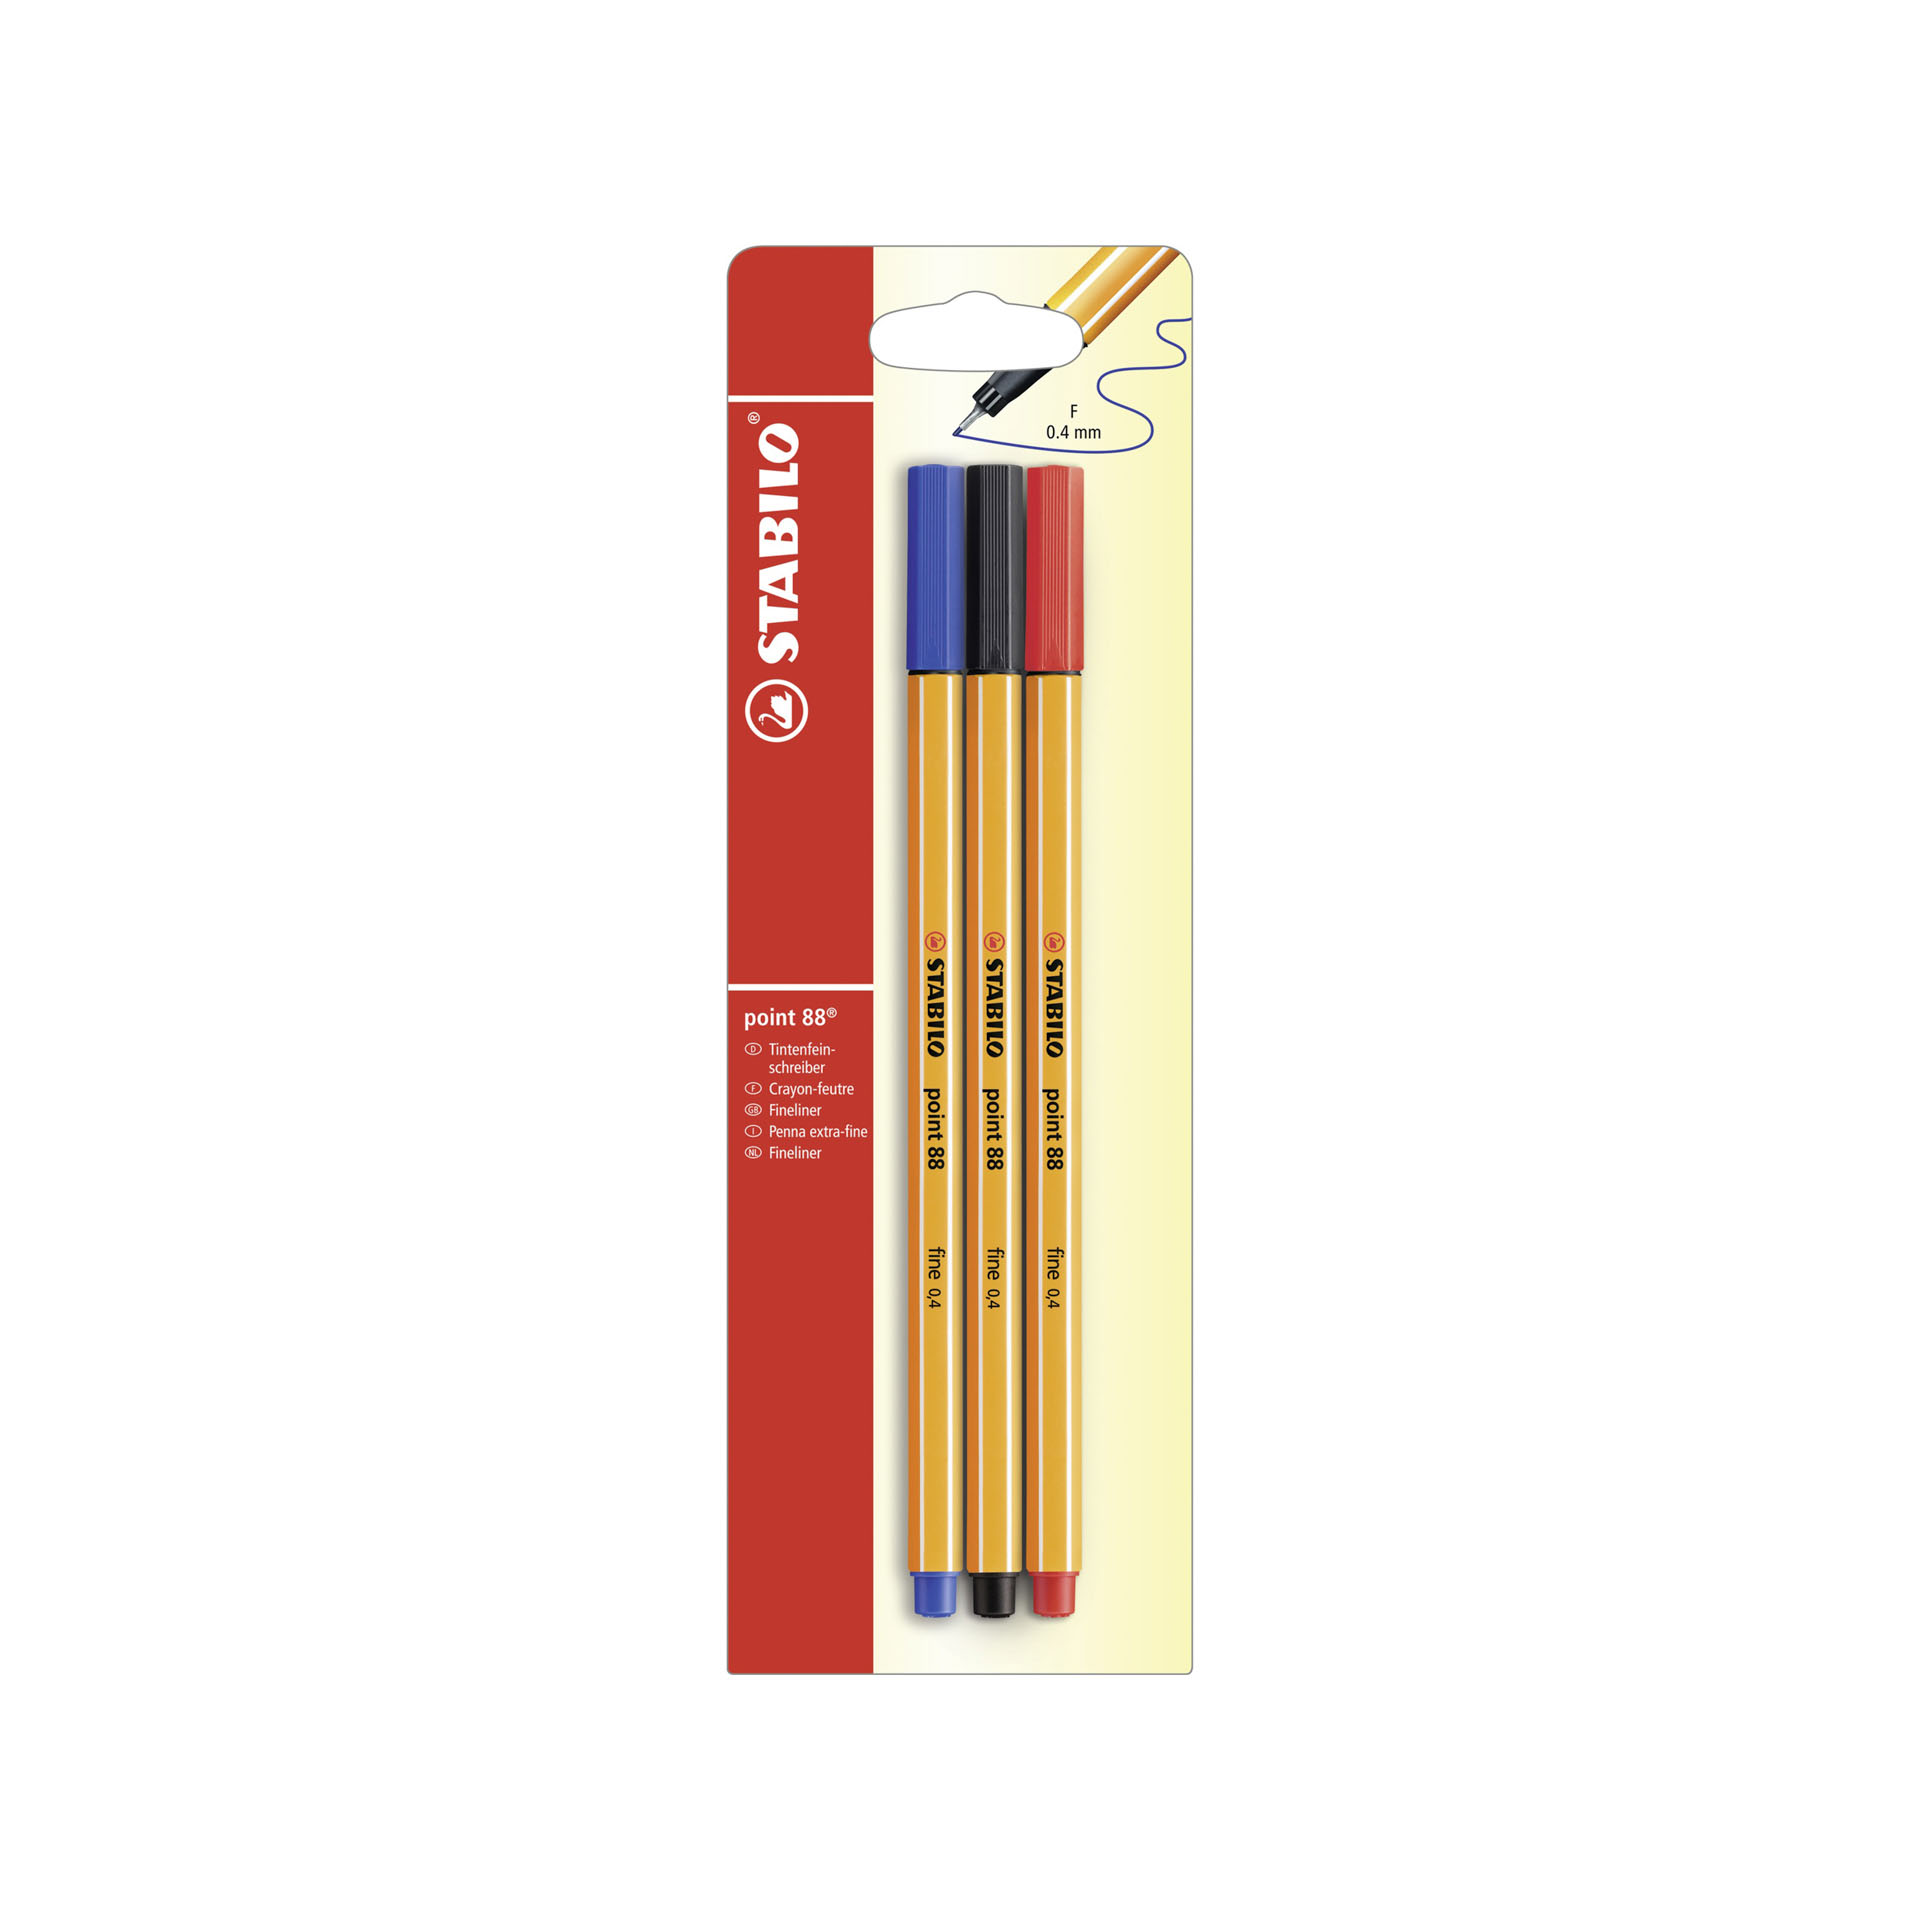 Fineliner - STABILO point 88 - Pack da 3 - Nero/Blu/Rosso, , large